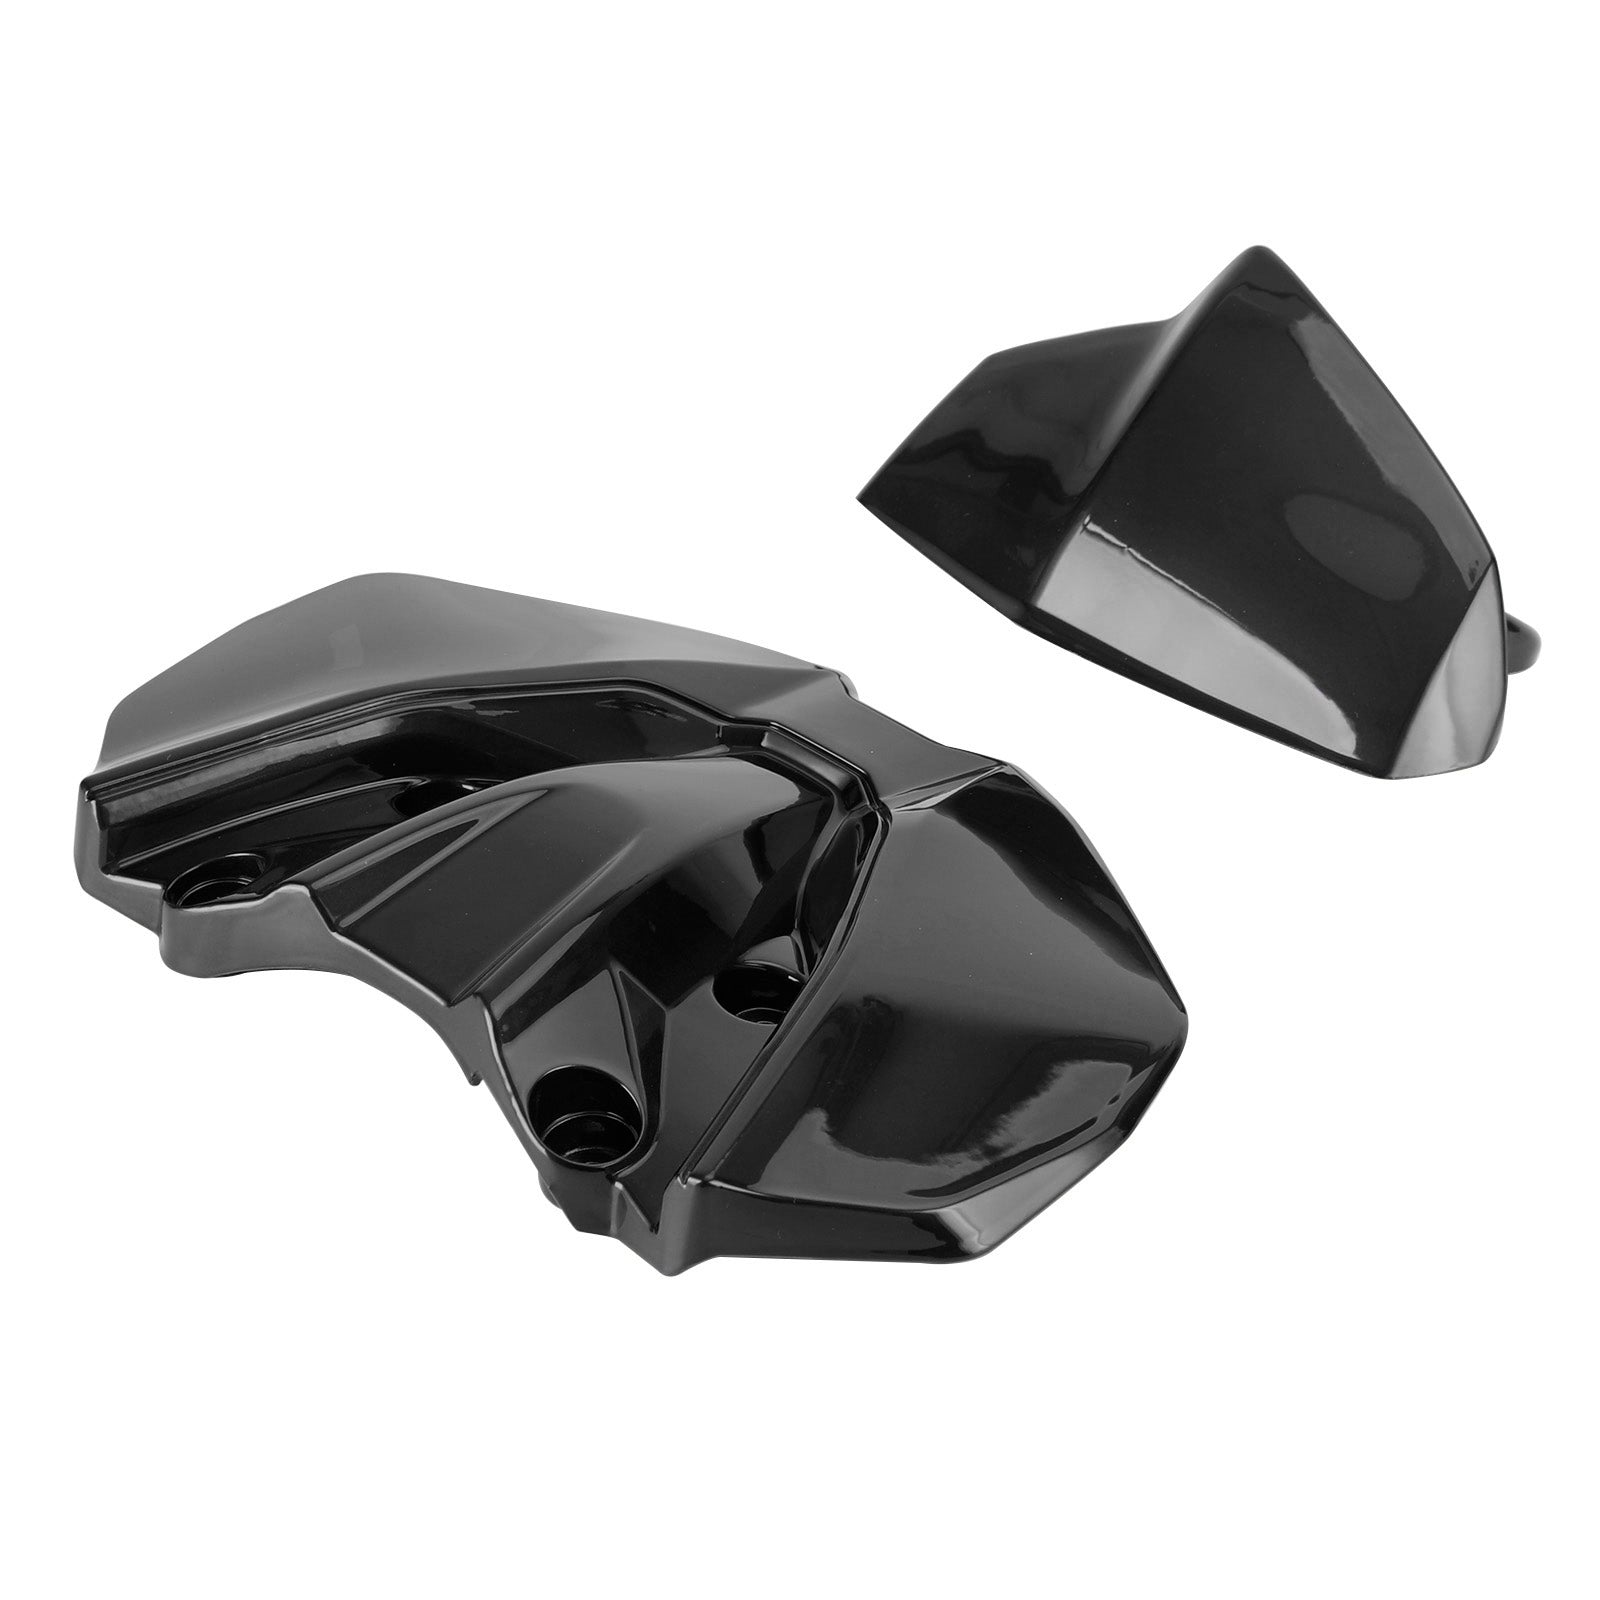 Headlight Fairing Windshield Cover For Yamaha MT-09 FZ09 MT-09 SP 2018-2020